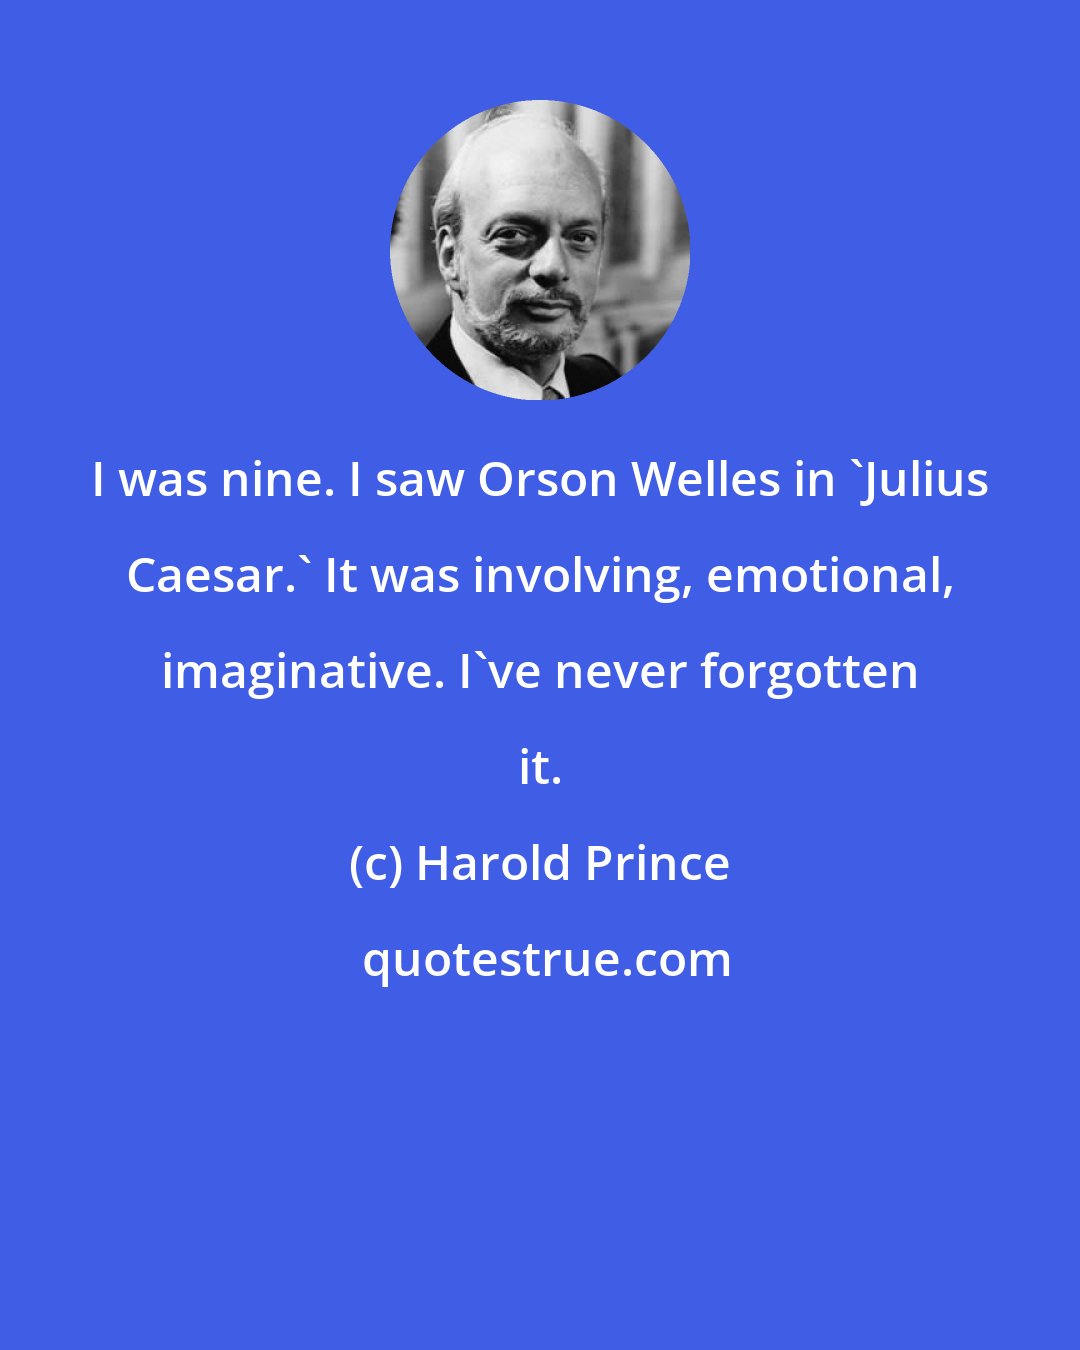 Harold Prince: I was nine. I saw Orson Welles in 'Julius Caesar.' It was involving, emotional, imaginative. I've never forgotten it.